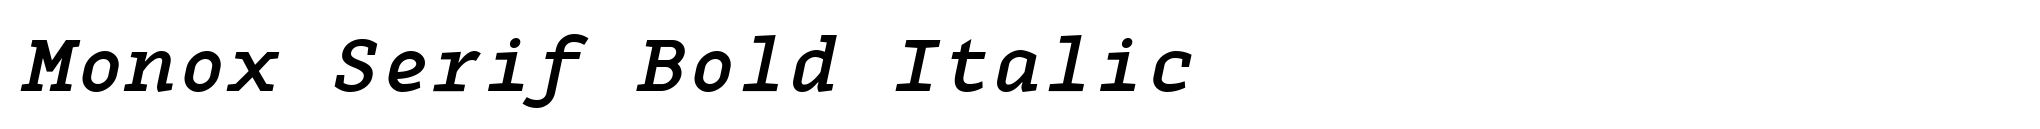 Monox Serif Bold Italic image